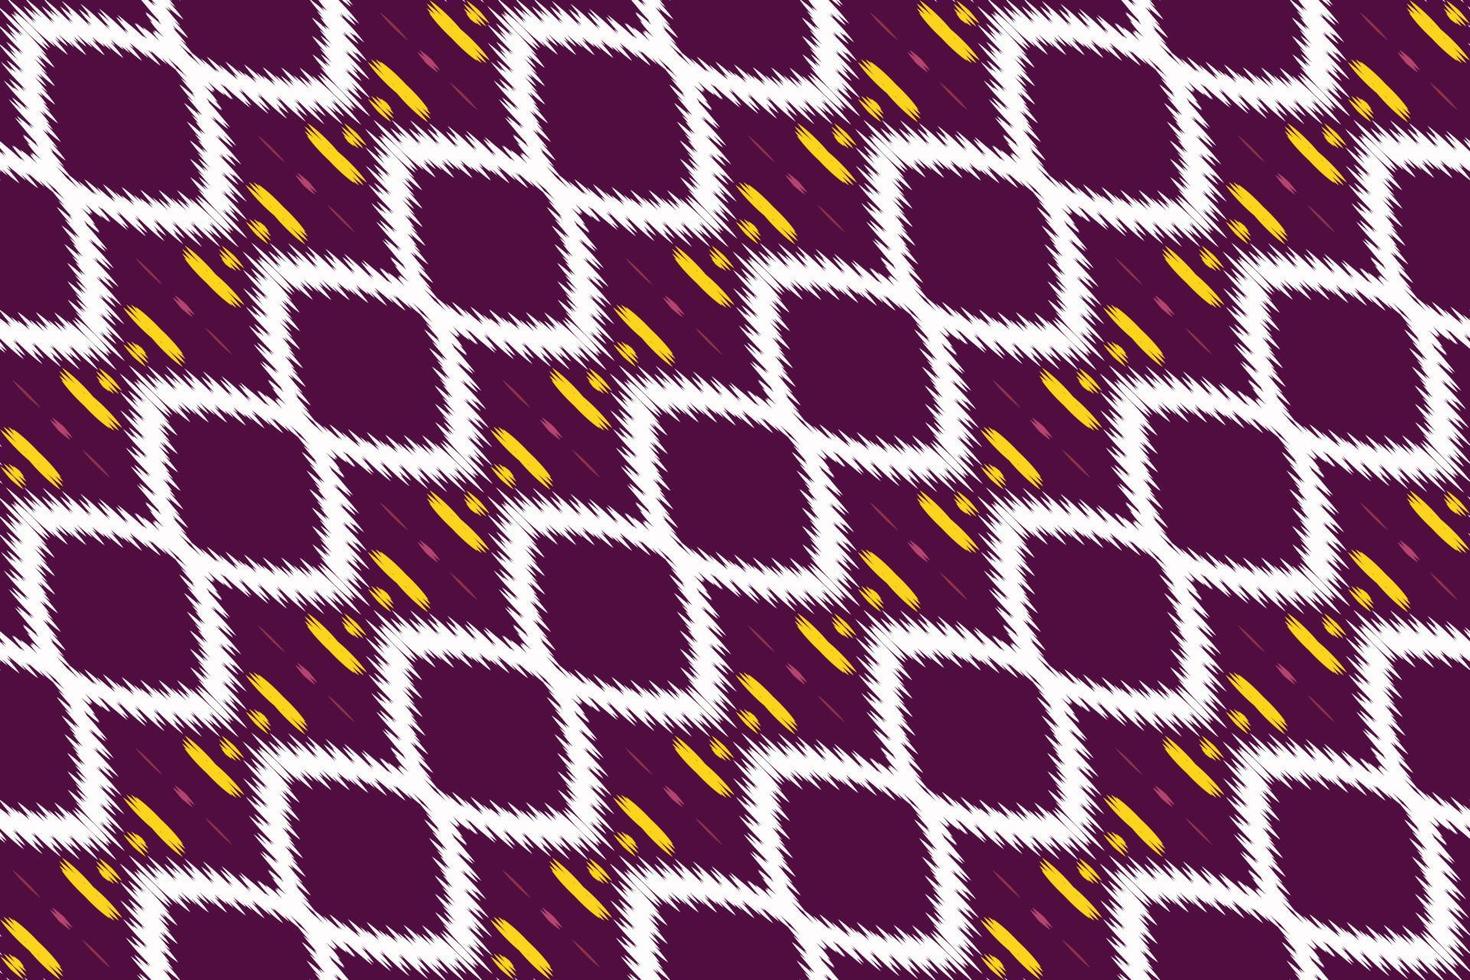 ikkat oder ikat streifen batik textil nahtloses muster digitales vektordesign für druck saree kurti borneo stoff rand pinsel symbole muster stilvoll vektor